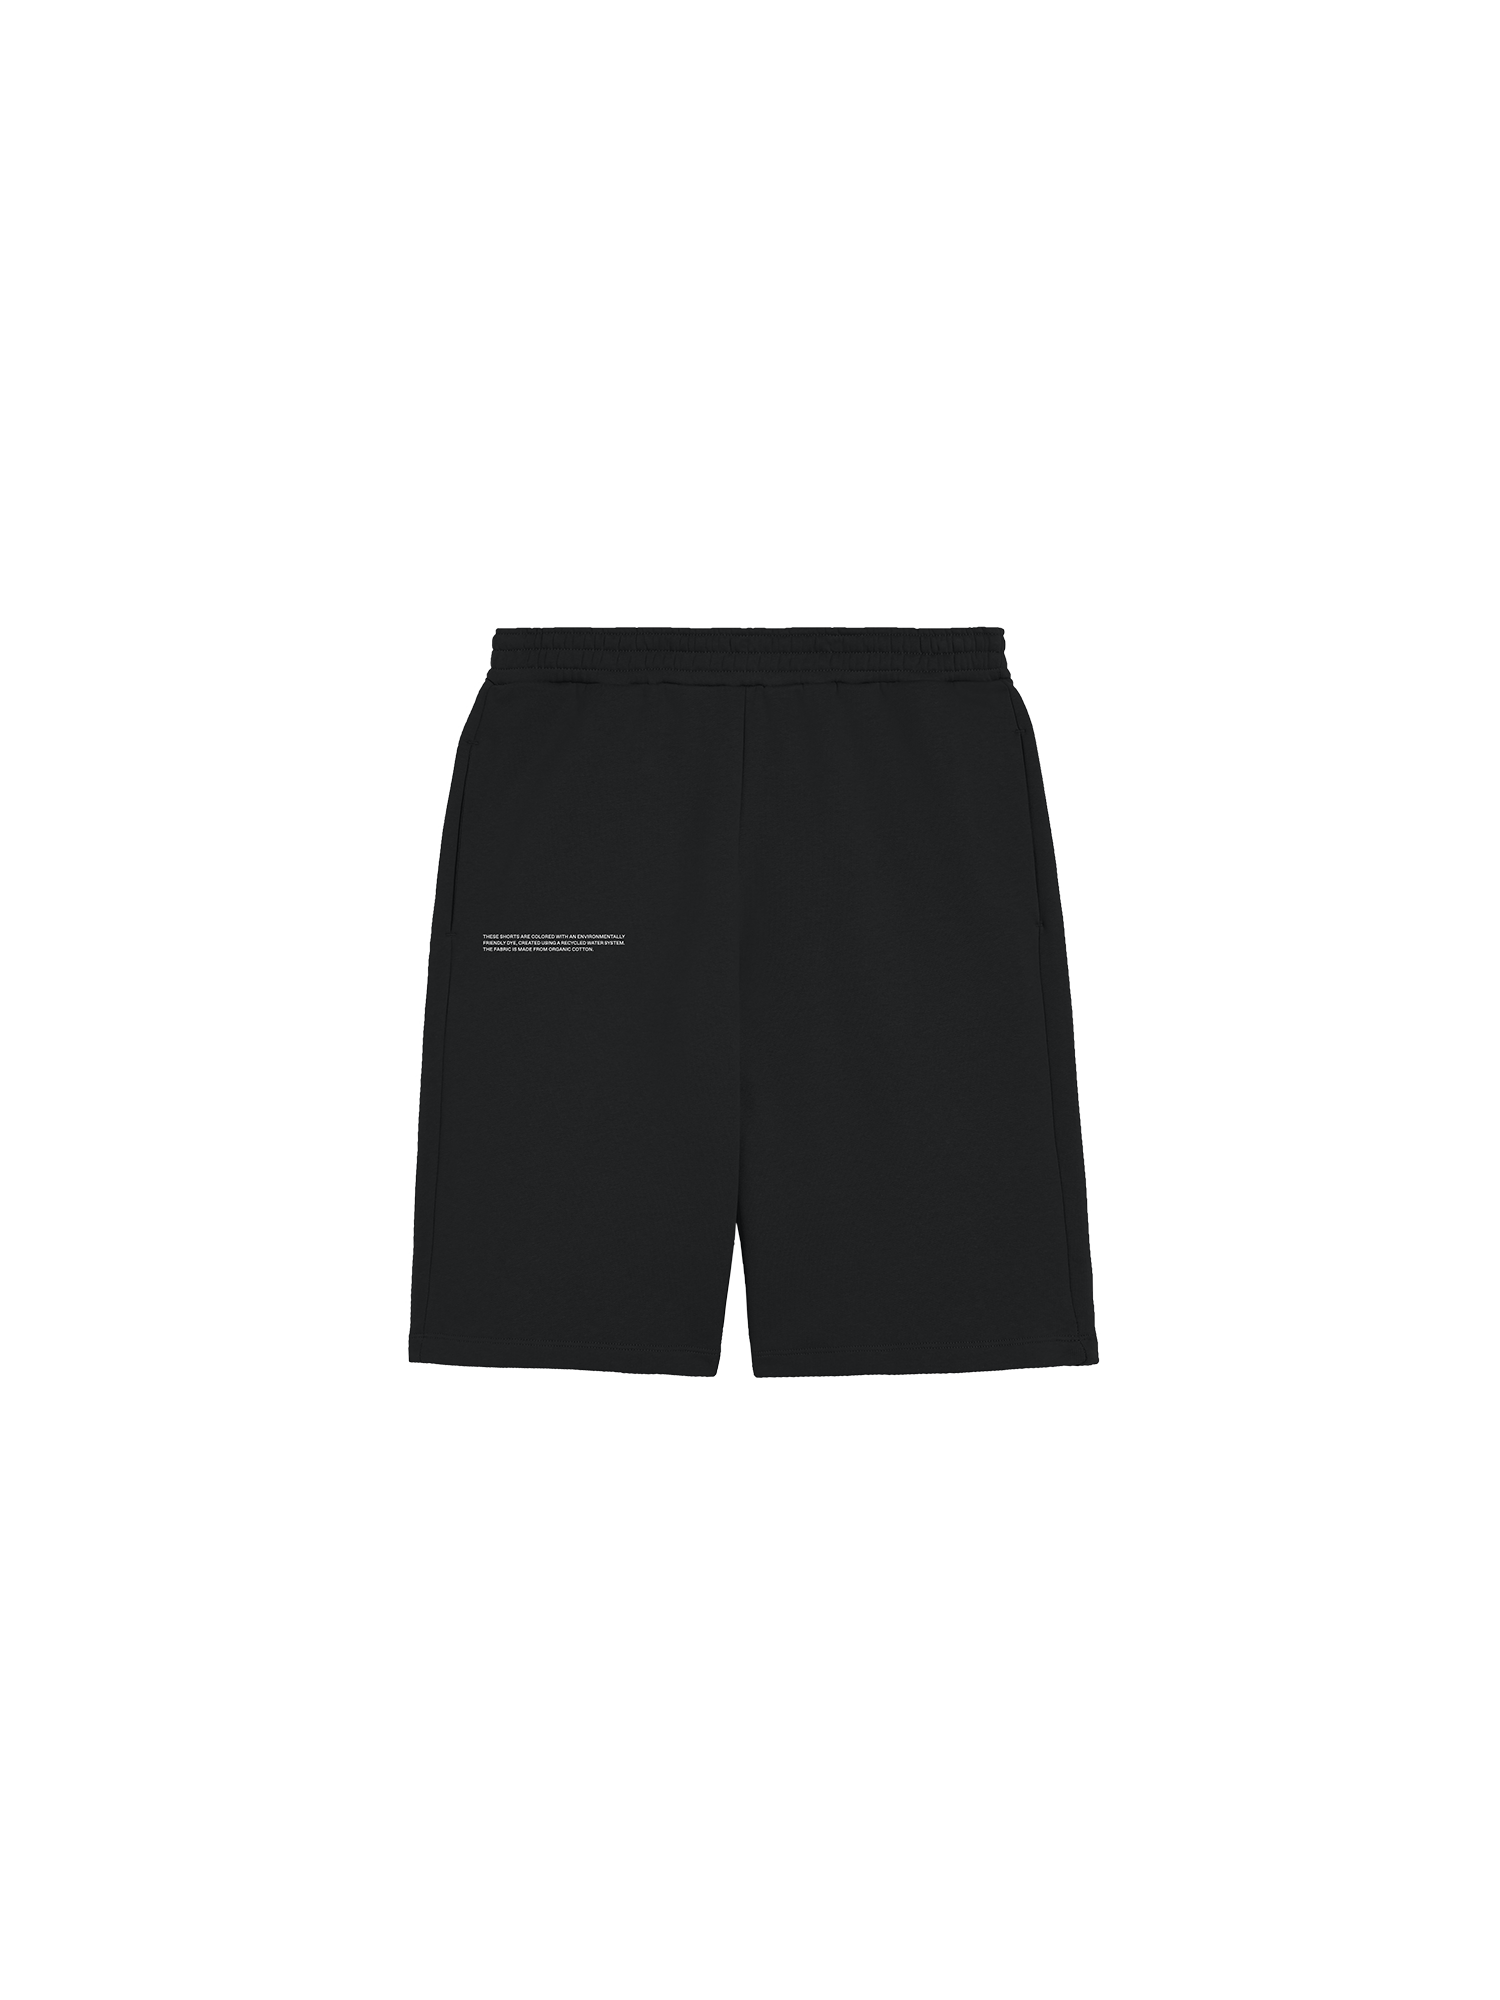 365 Midweight Long Shorts - Black - Pangaia